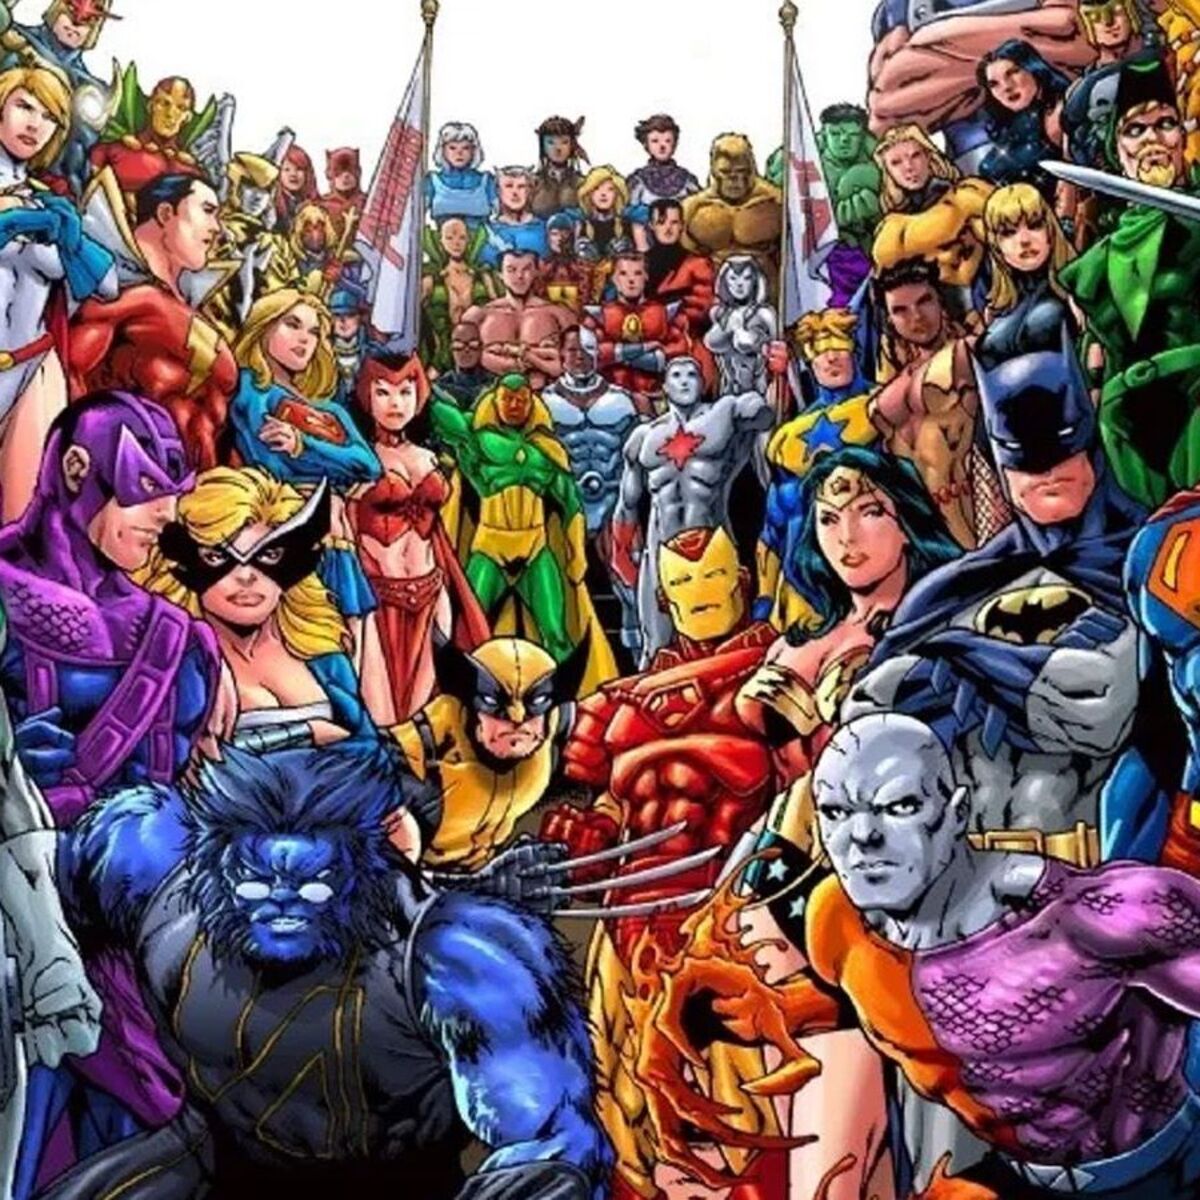 Ready go to ... https://www.kaggle.com/datasets/baraazaid/superherodb [ Superhero Characters and Powers]